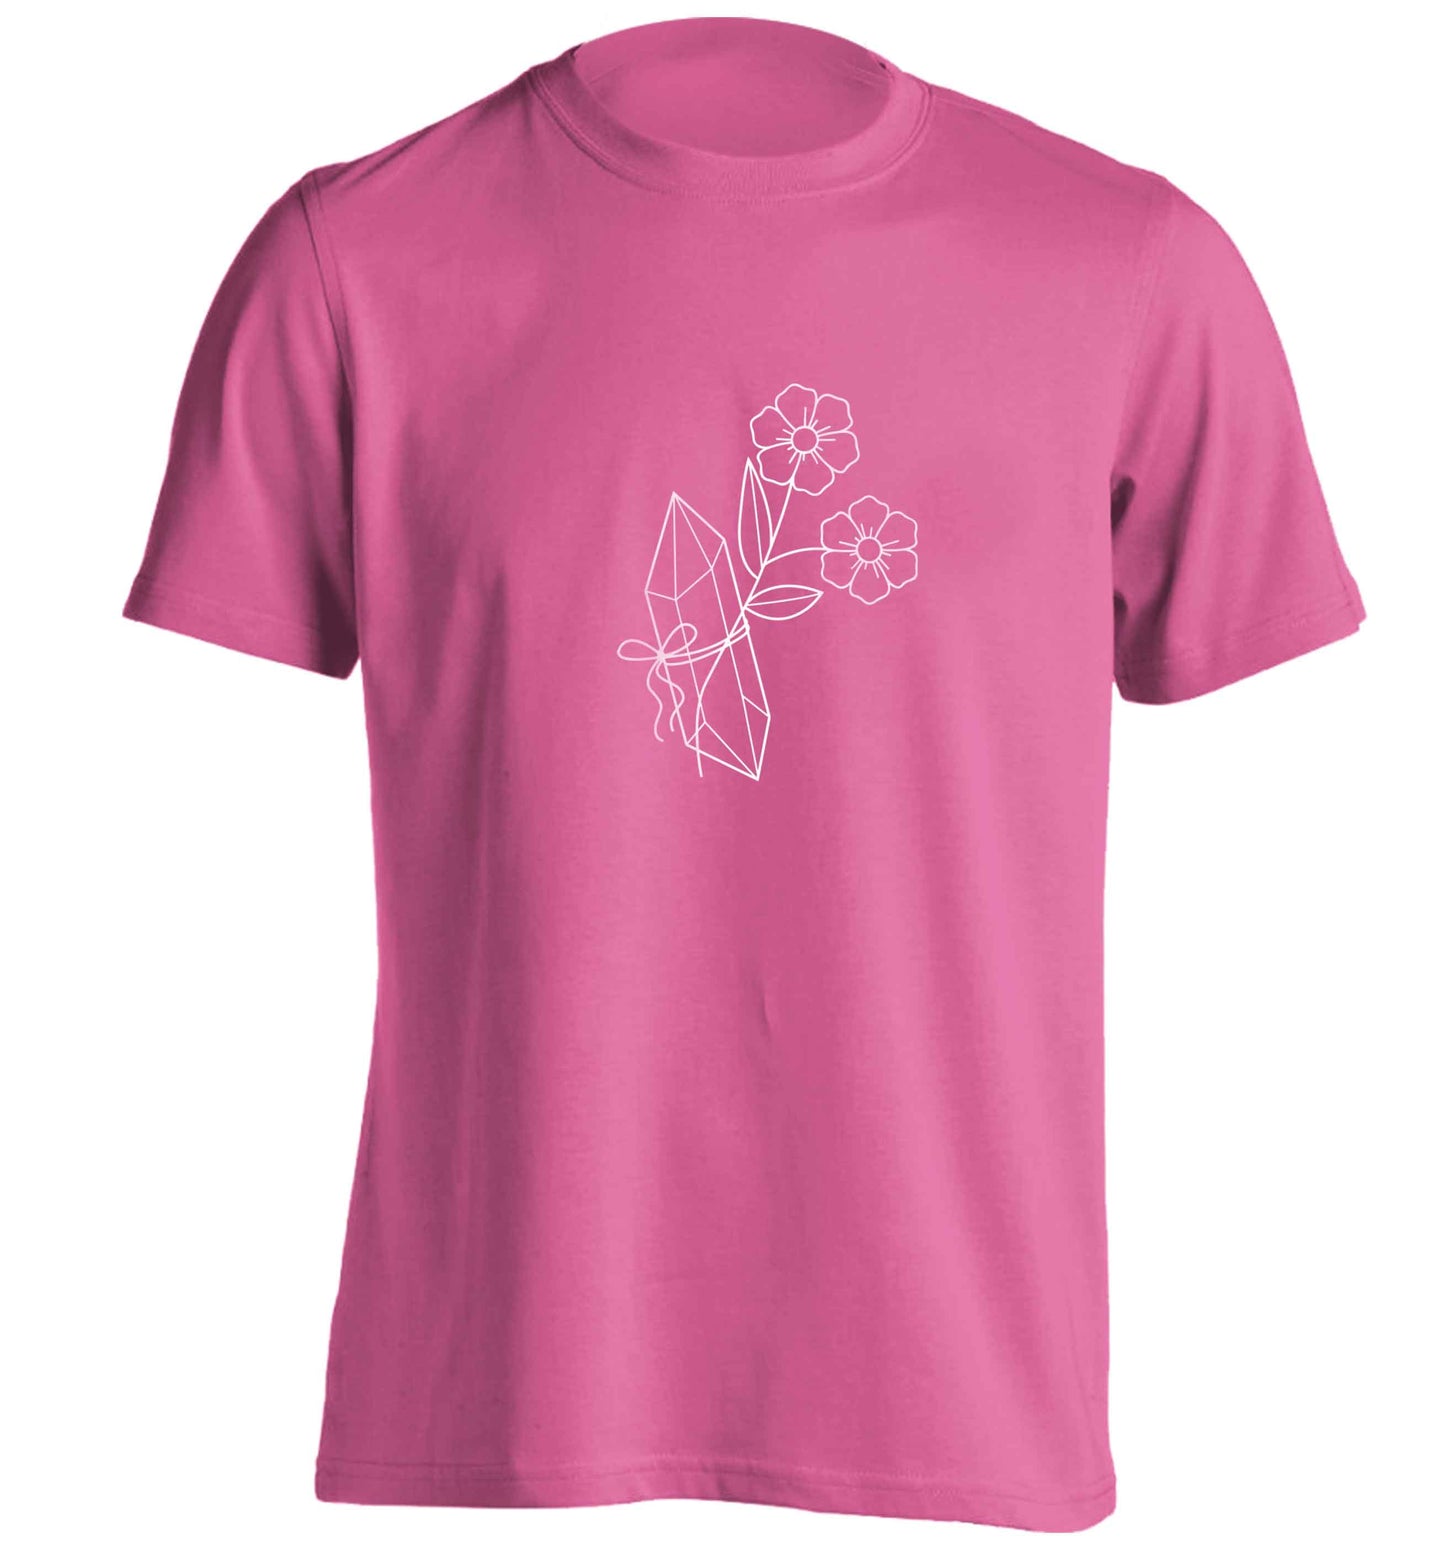 Crystal flower illustration adults unisex pink Tshirt 2XL